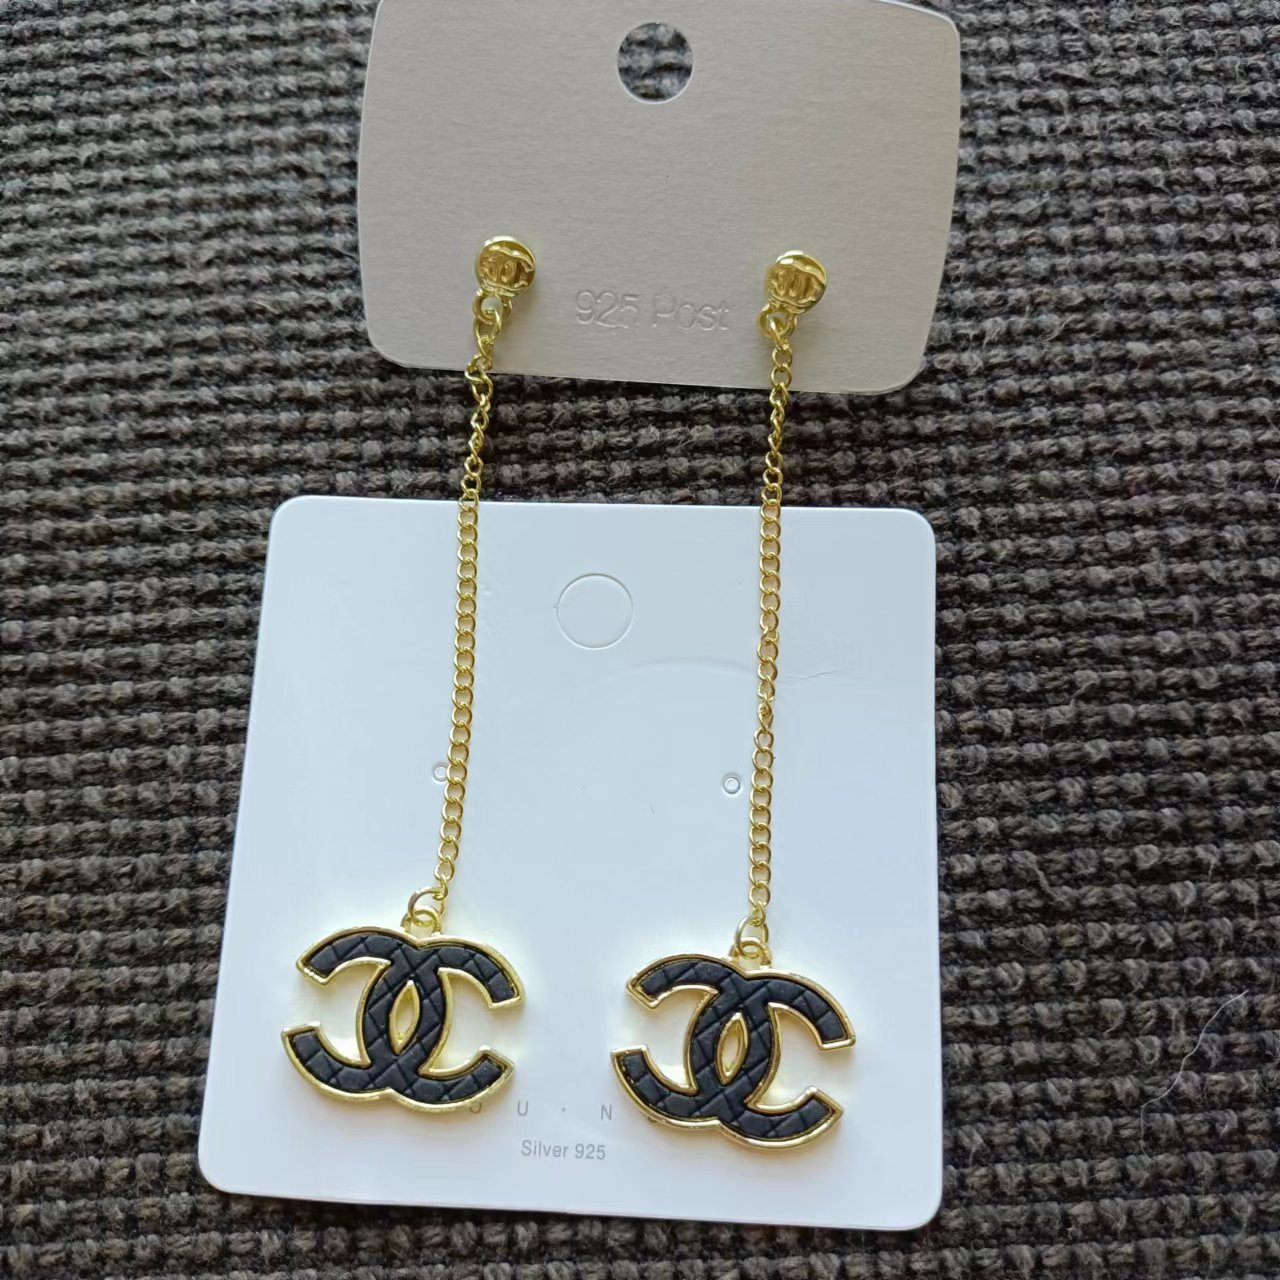 Special Sales! Chanel earrings